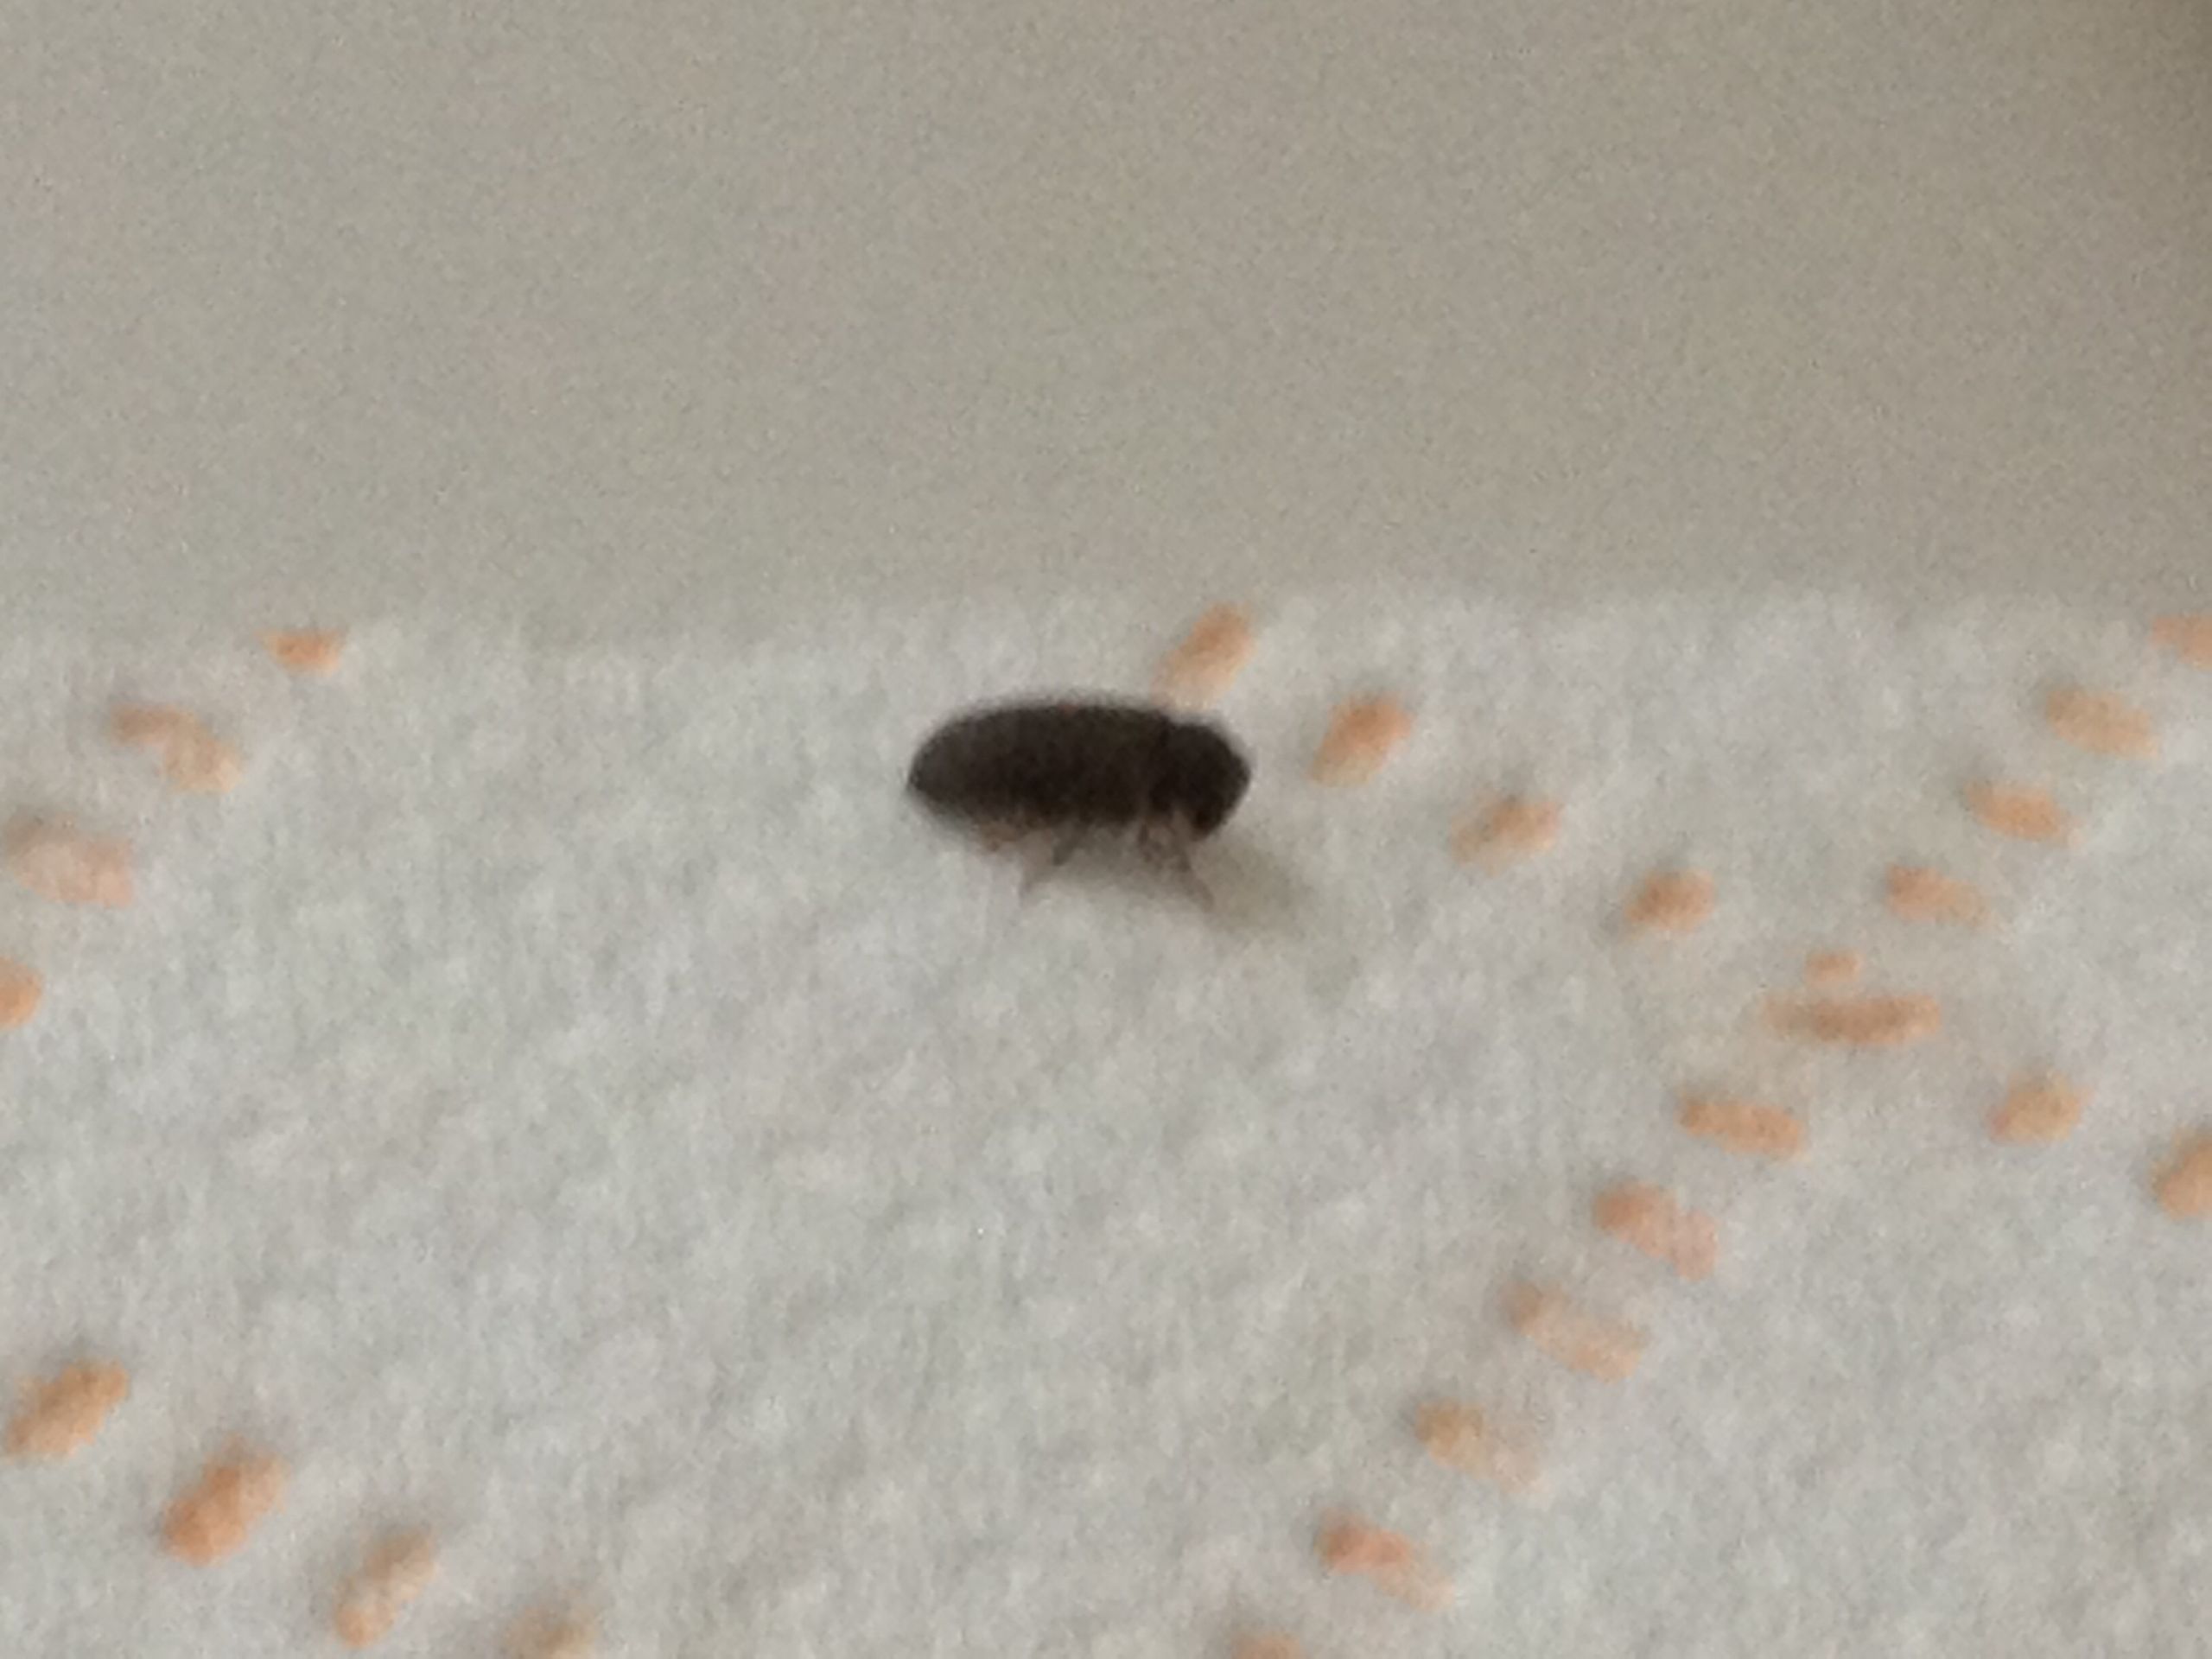 Small Black Bugs In Bathroom
 NaturePlus Please help me identify tiny black bugs found